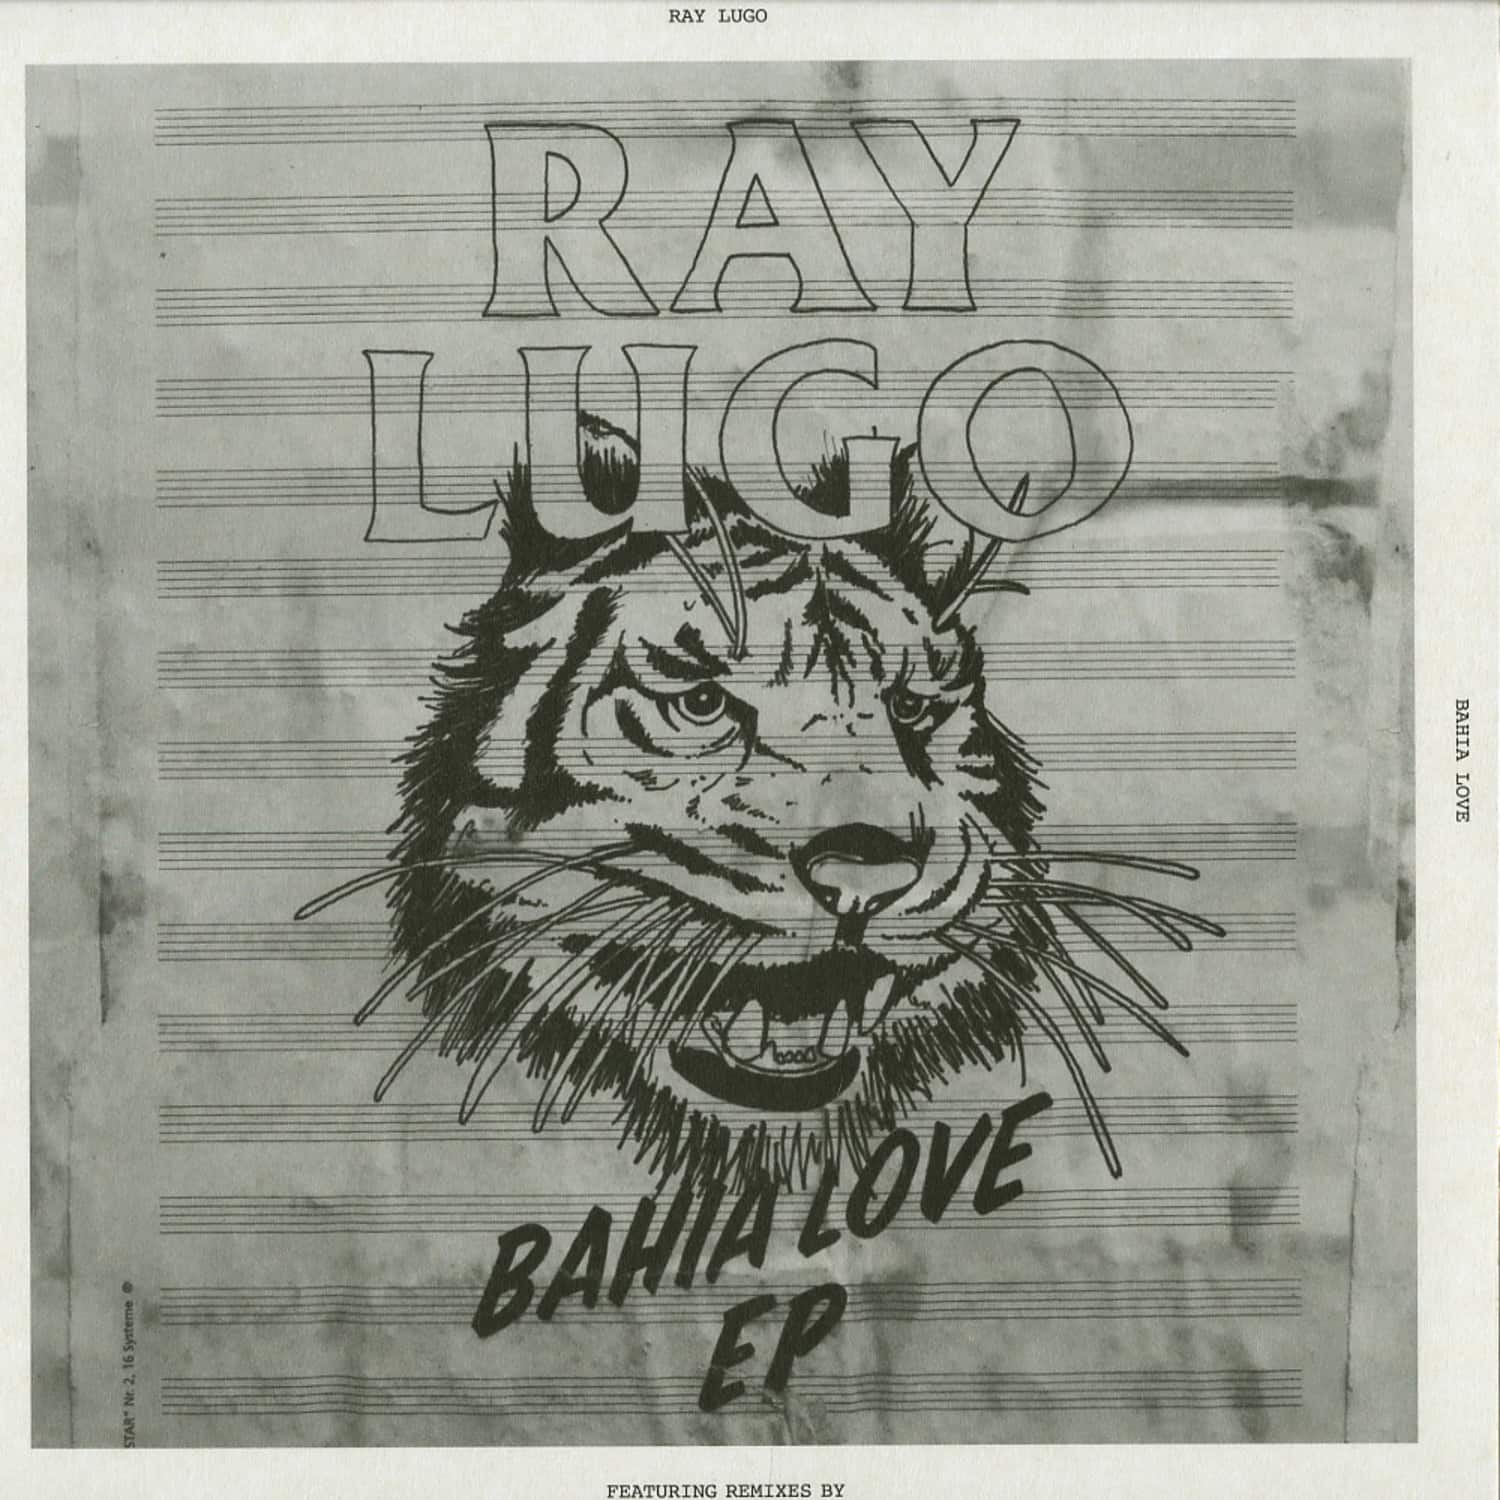 Ray Lugo - BAHIA LOVE